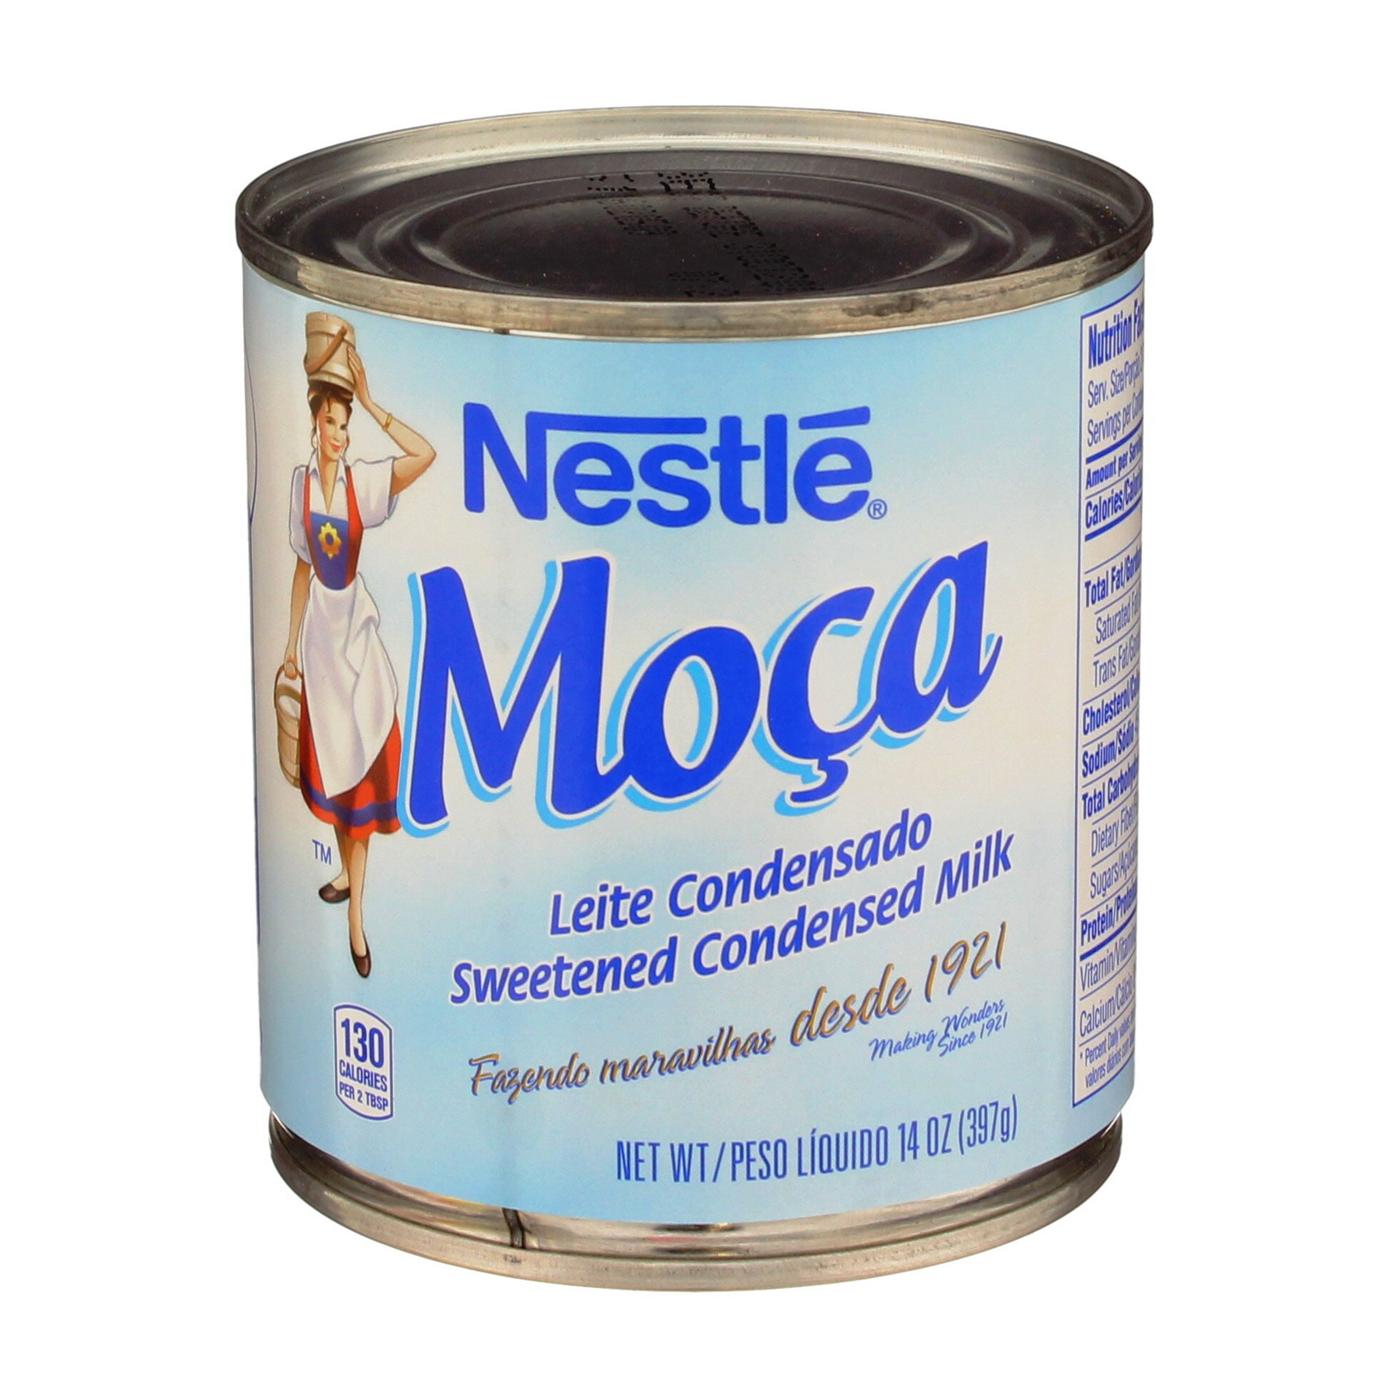 Nestle Moca Leite Condensado Sweetened Condensed Milk; image 1 of 2